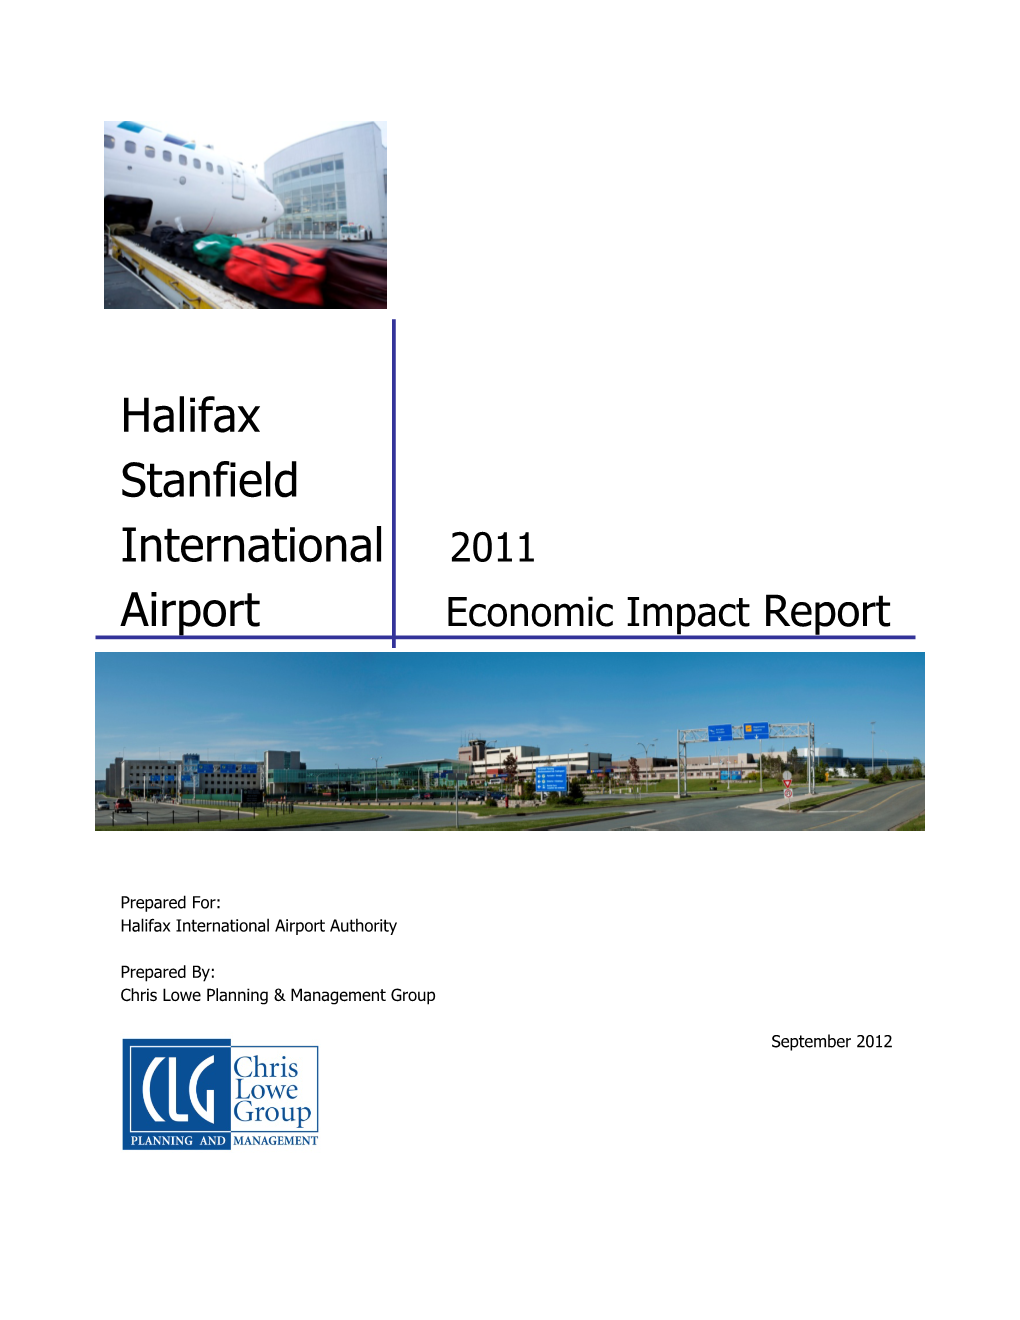 Halifax Stanfield International 2011 Airport Economic Impact Report